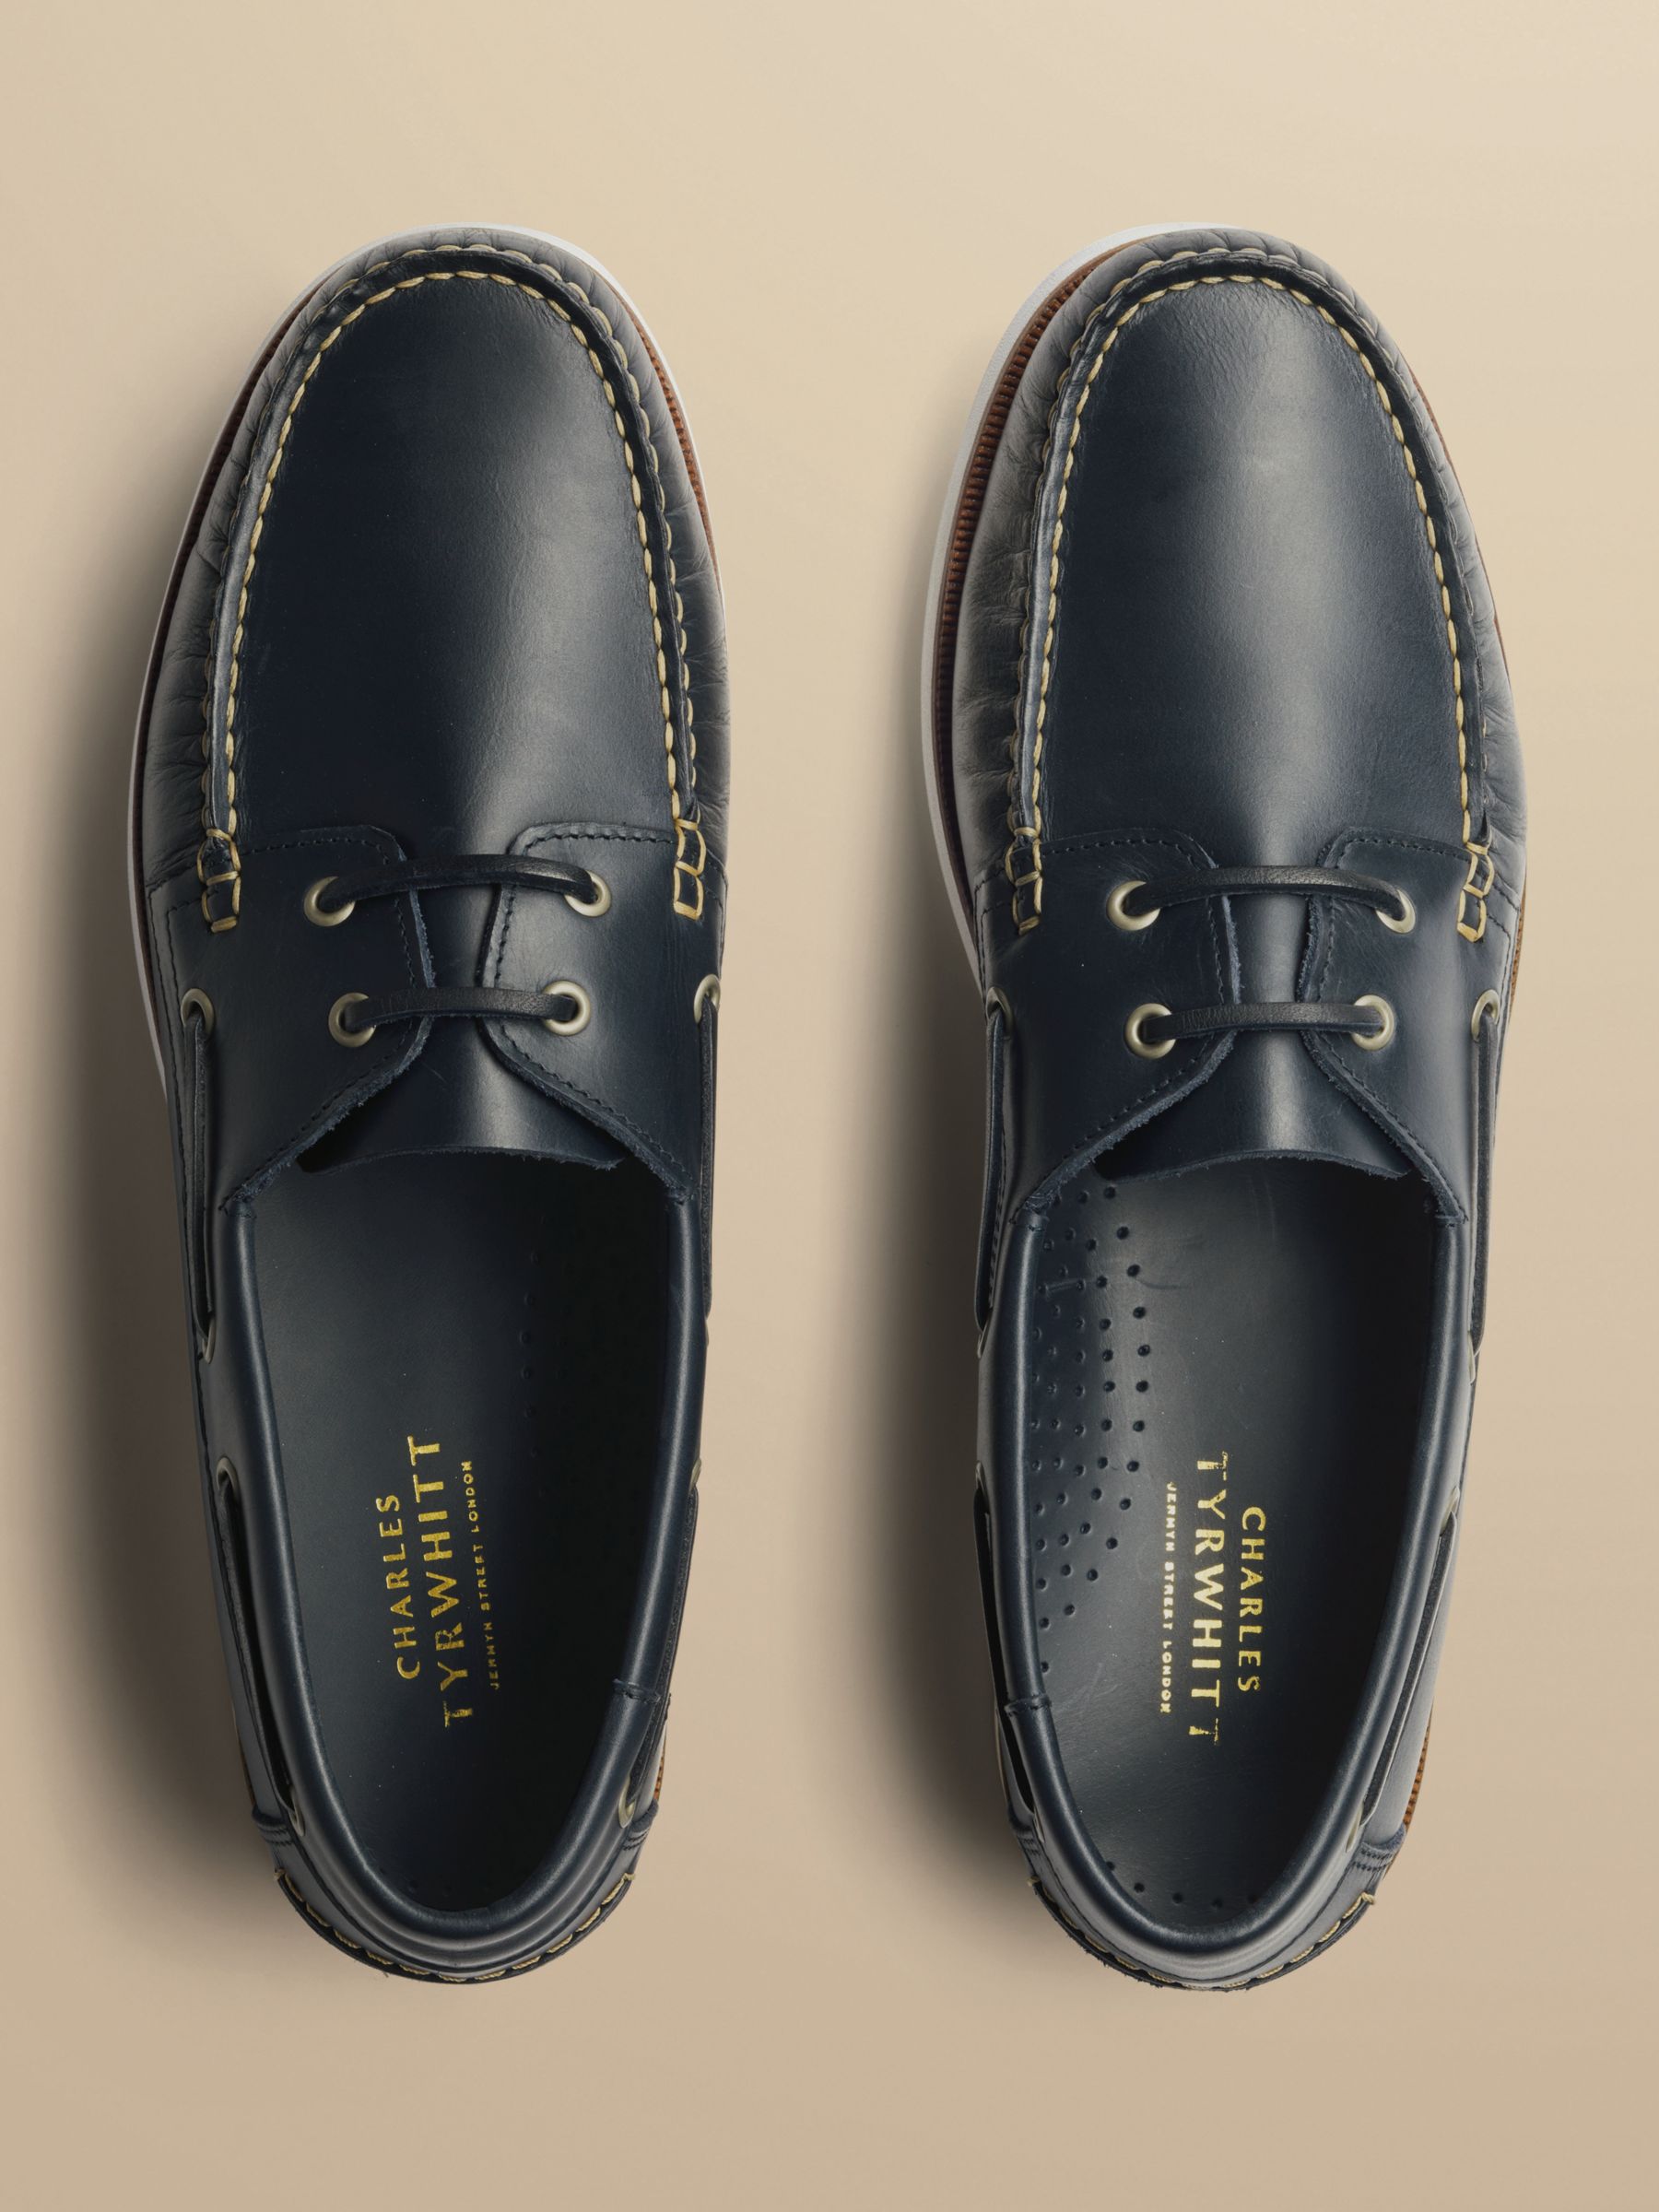 Charles Tyrwhitt Leather Boat Shoes, Dark Navy, 9